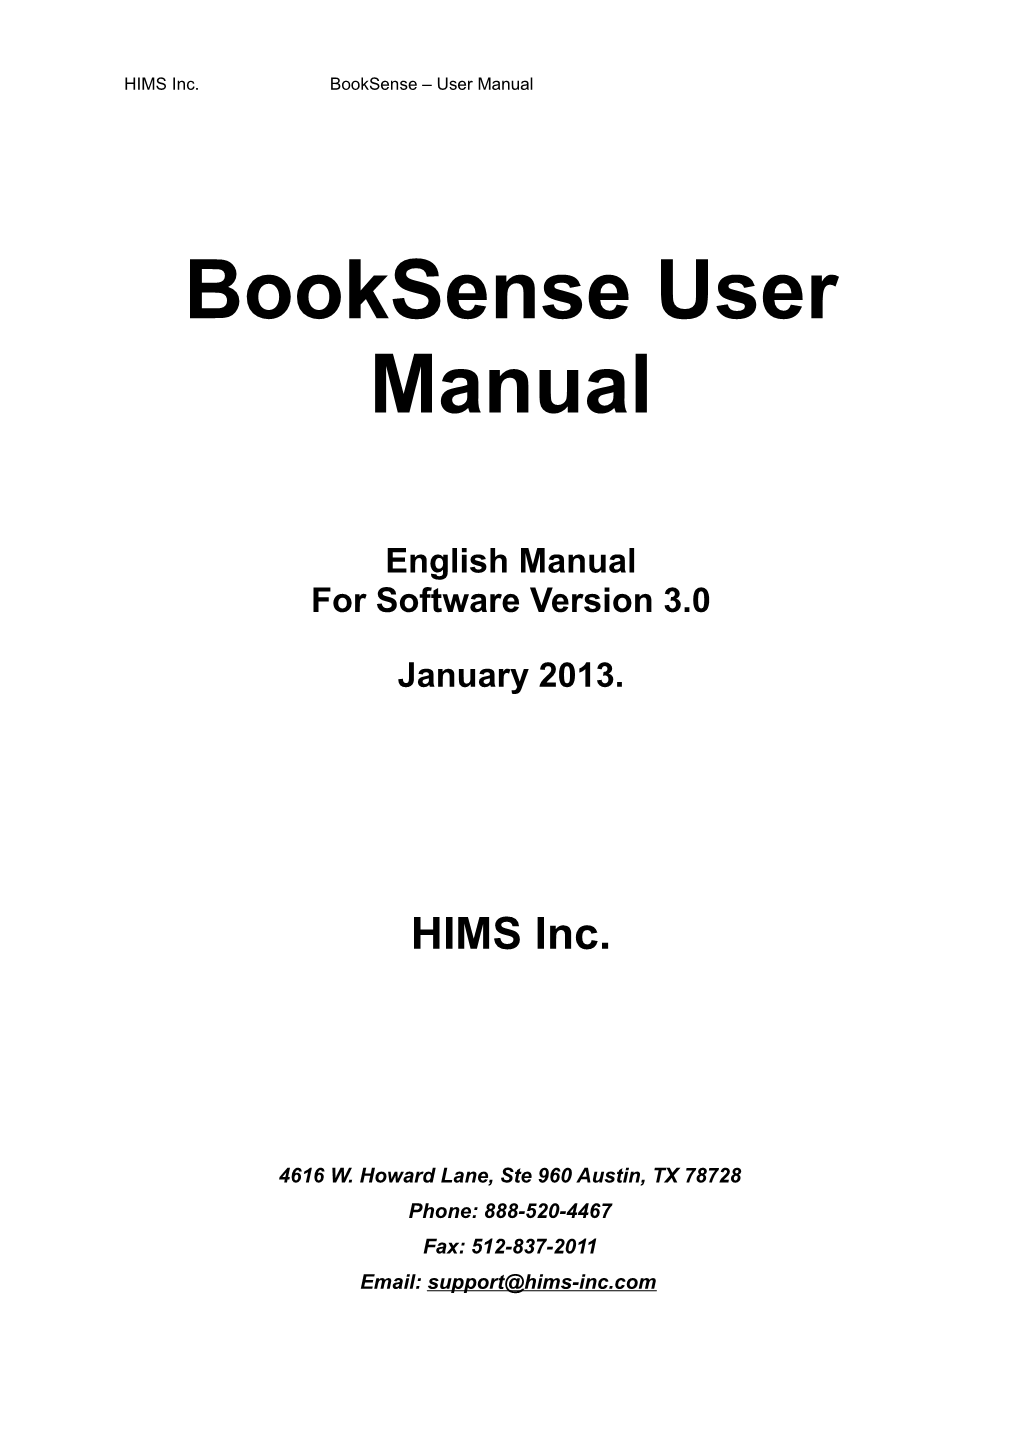 HIMS Inc. Booksense User Manual s1